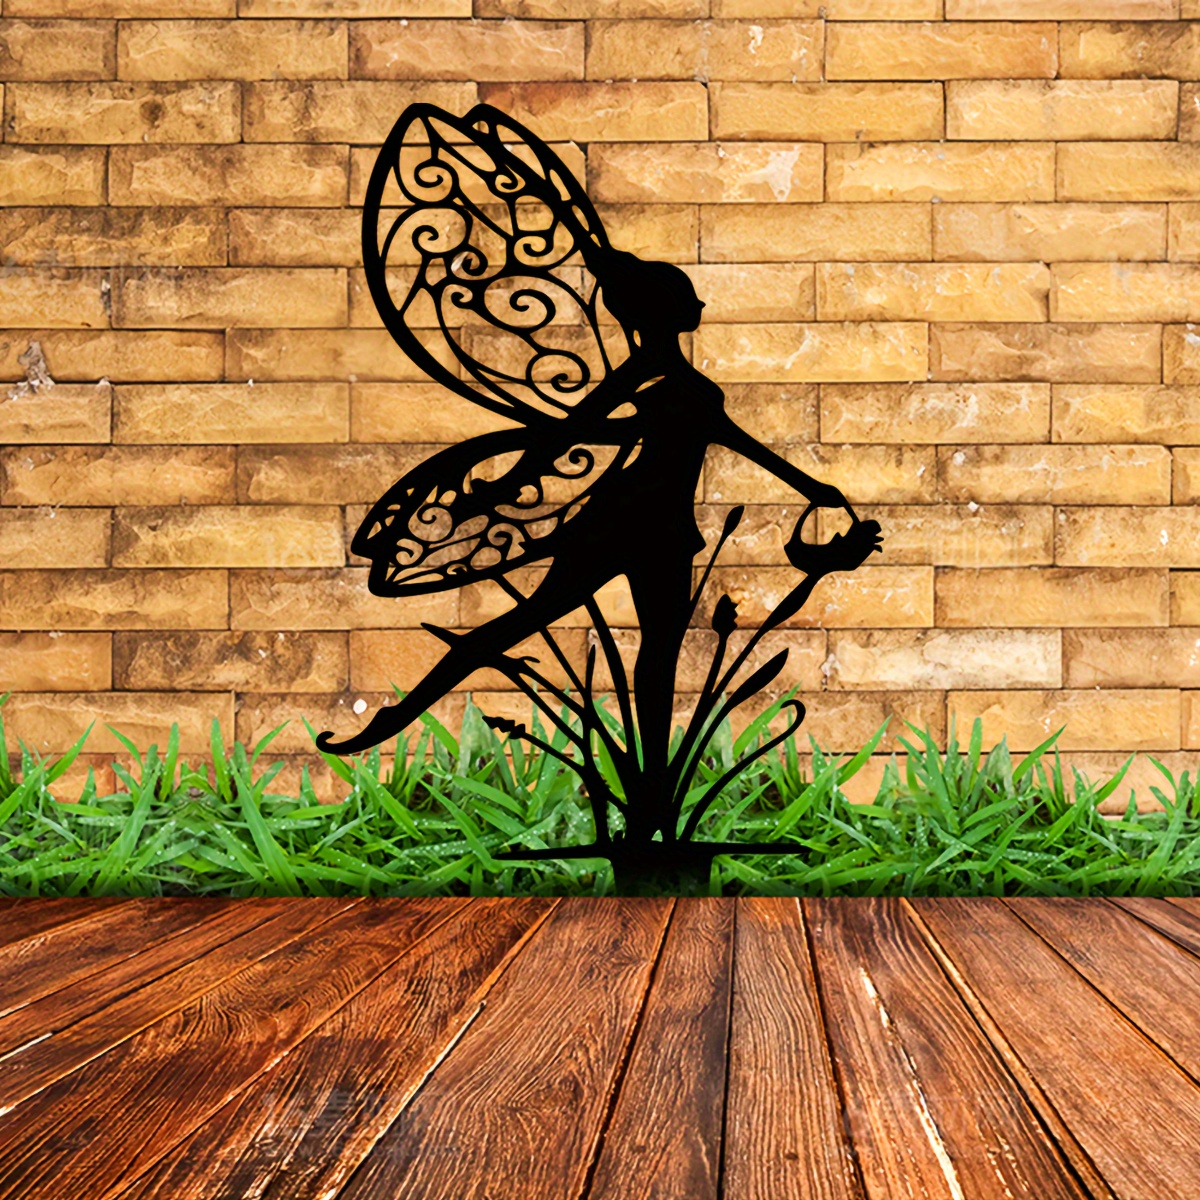 

1pc, Creative Flower Fairy Elf Artwork Insert Decoration Ornament Outdoor Yard Metal Iron Craft, Yard Decor